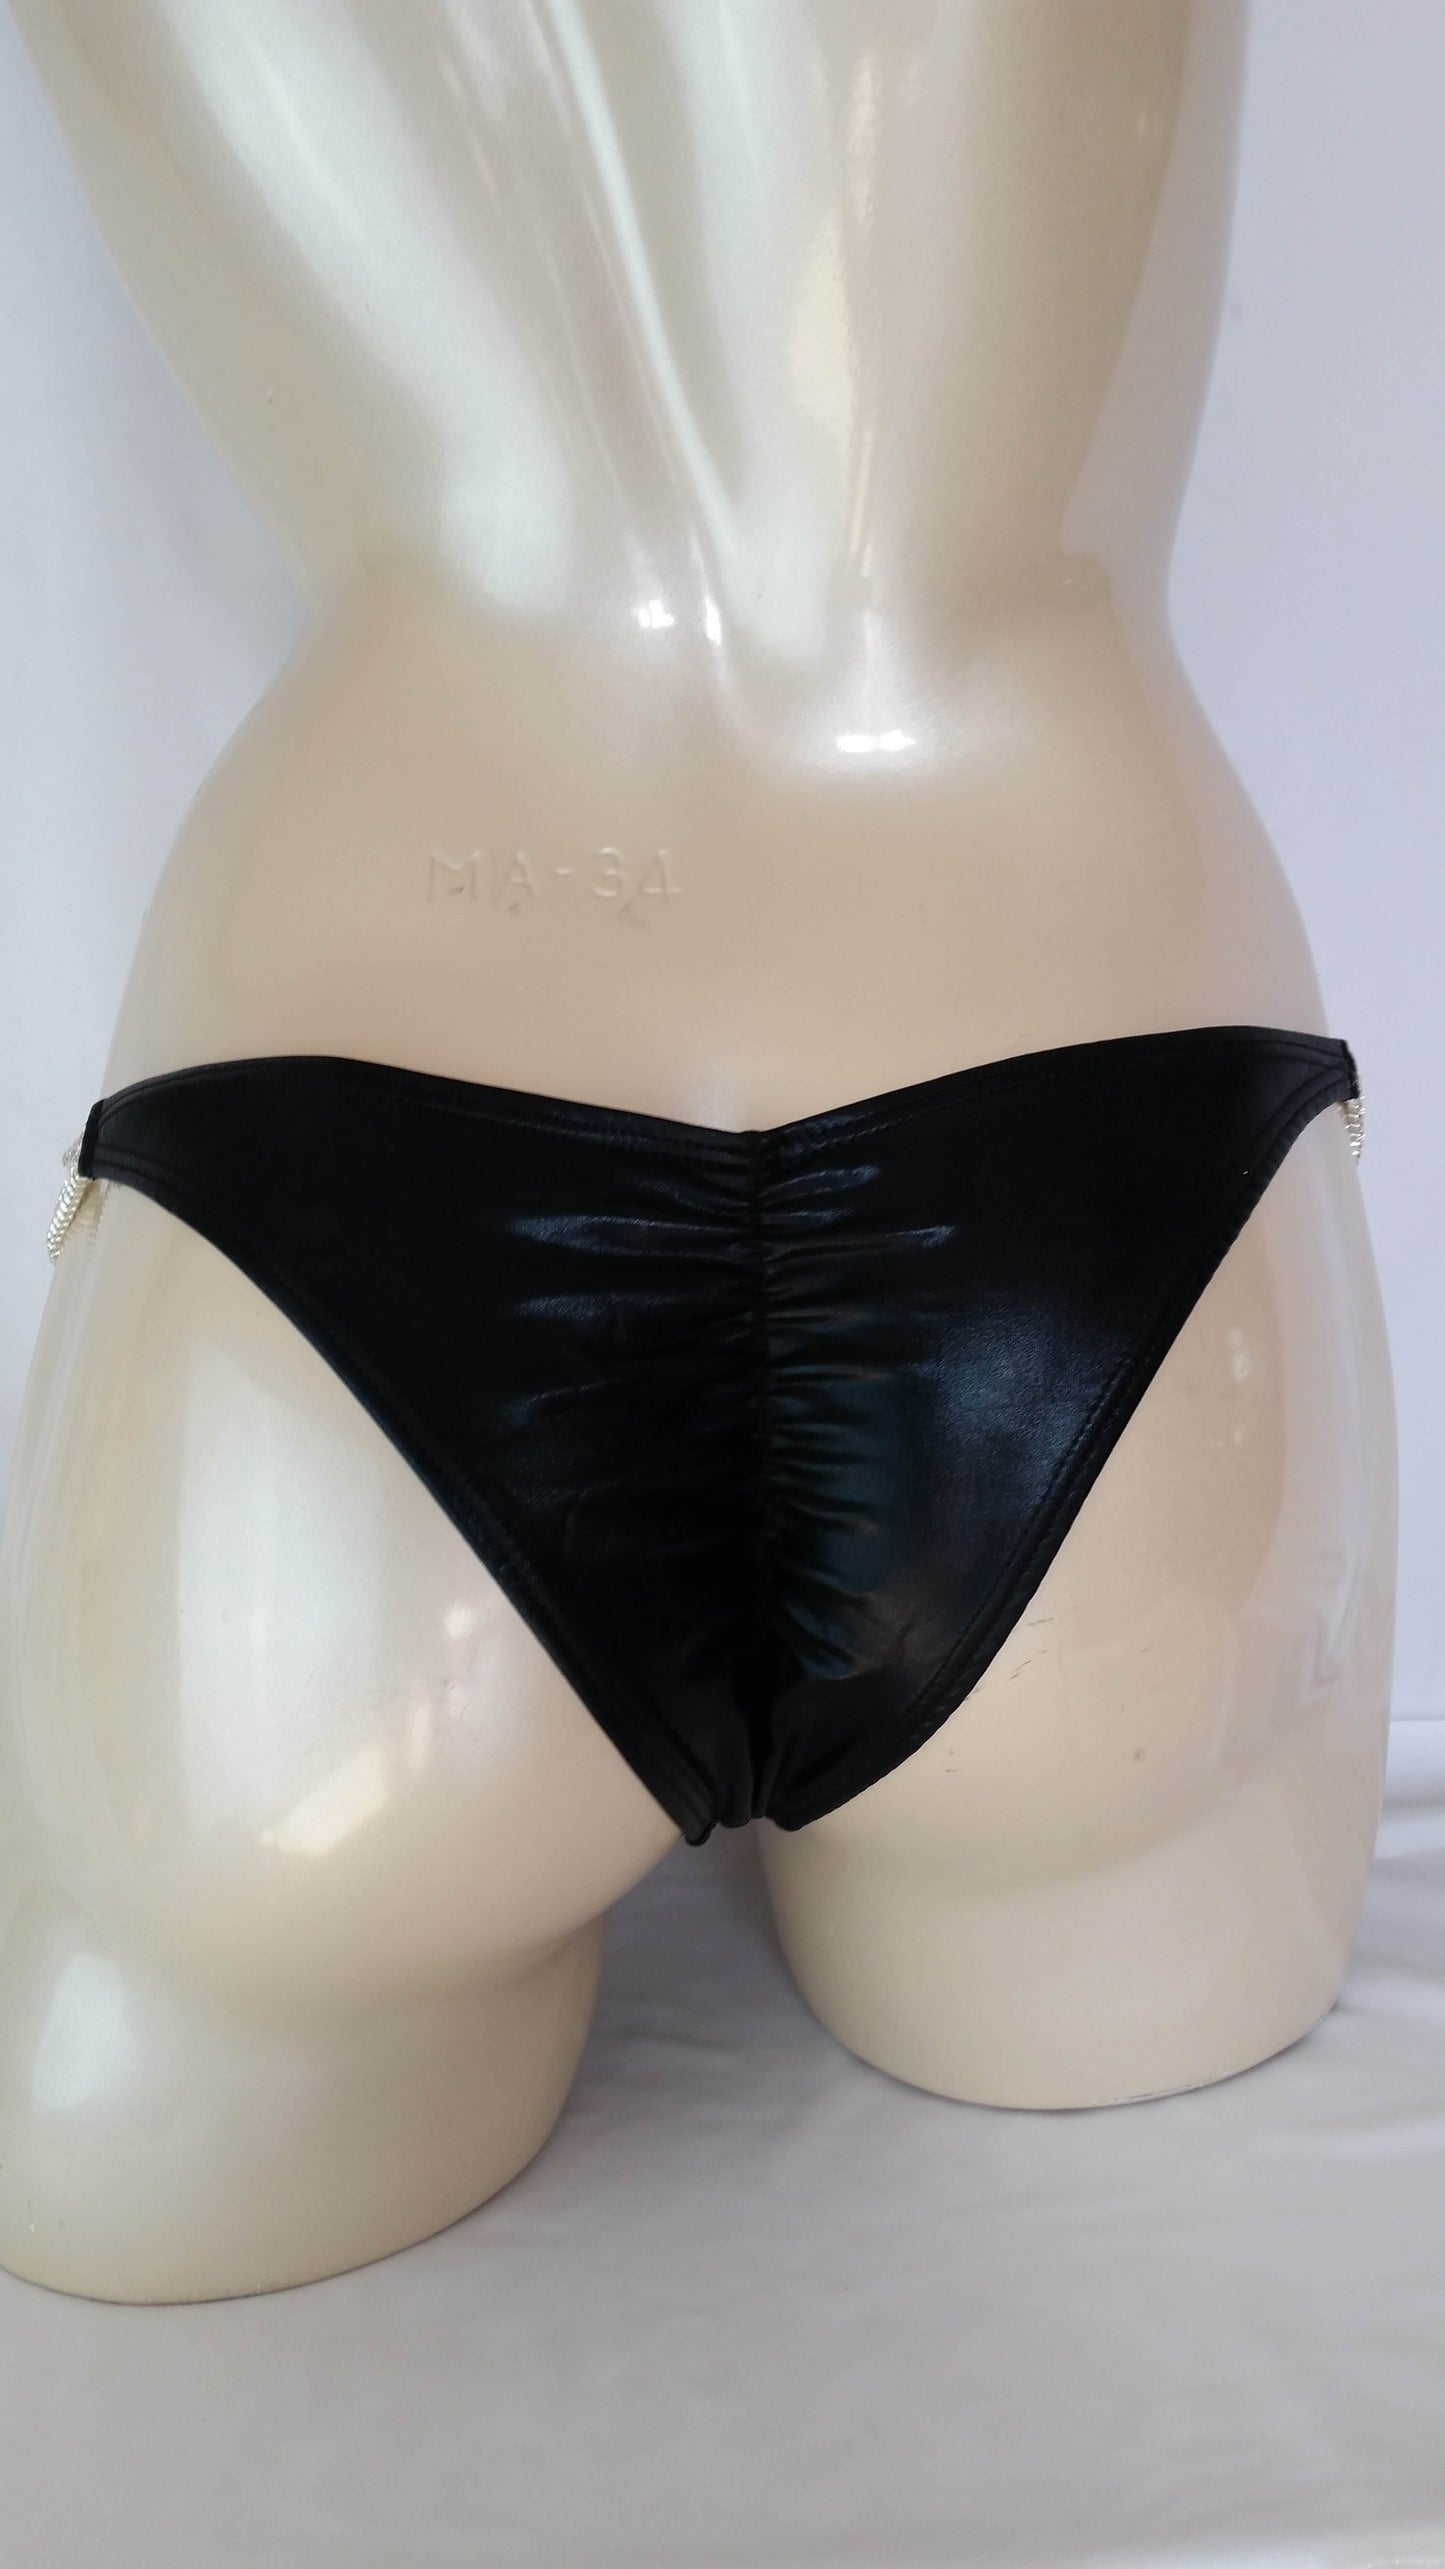 Black leather bikini with black rhinestone in a linear pattern design